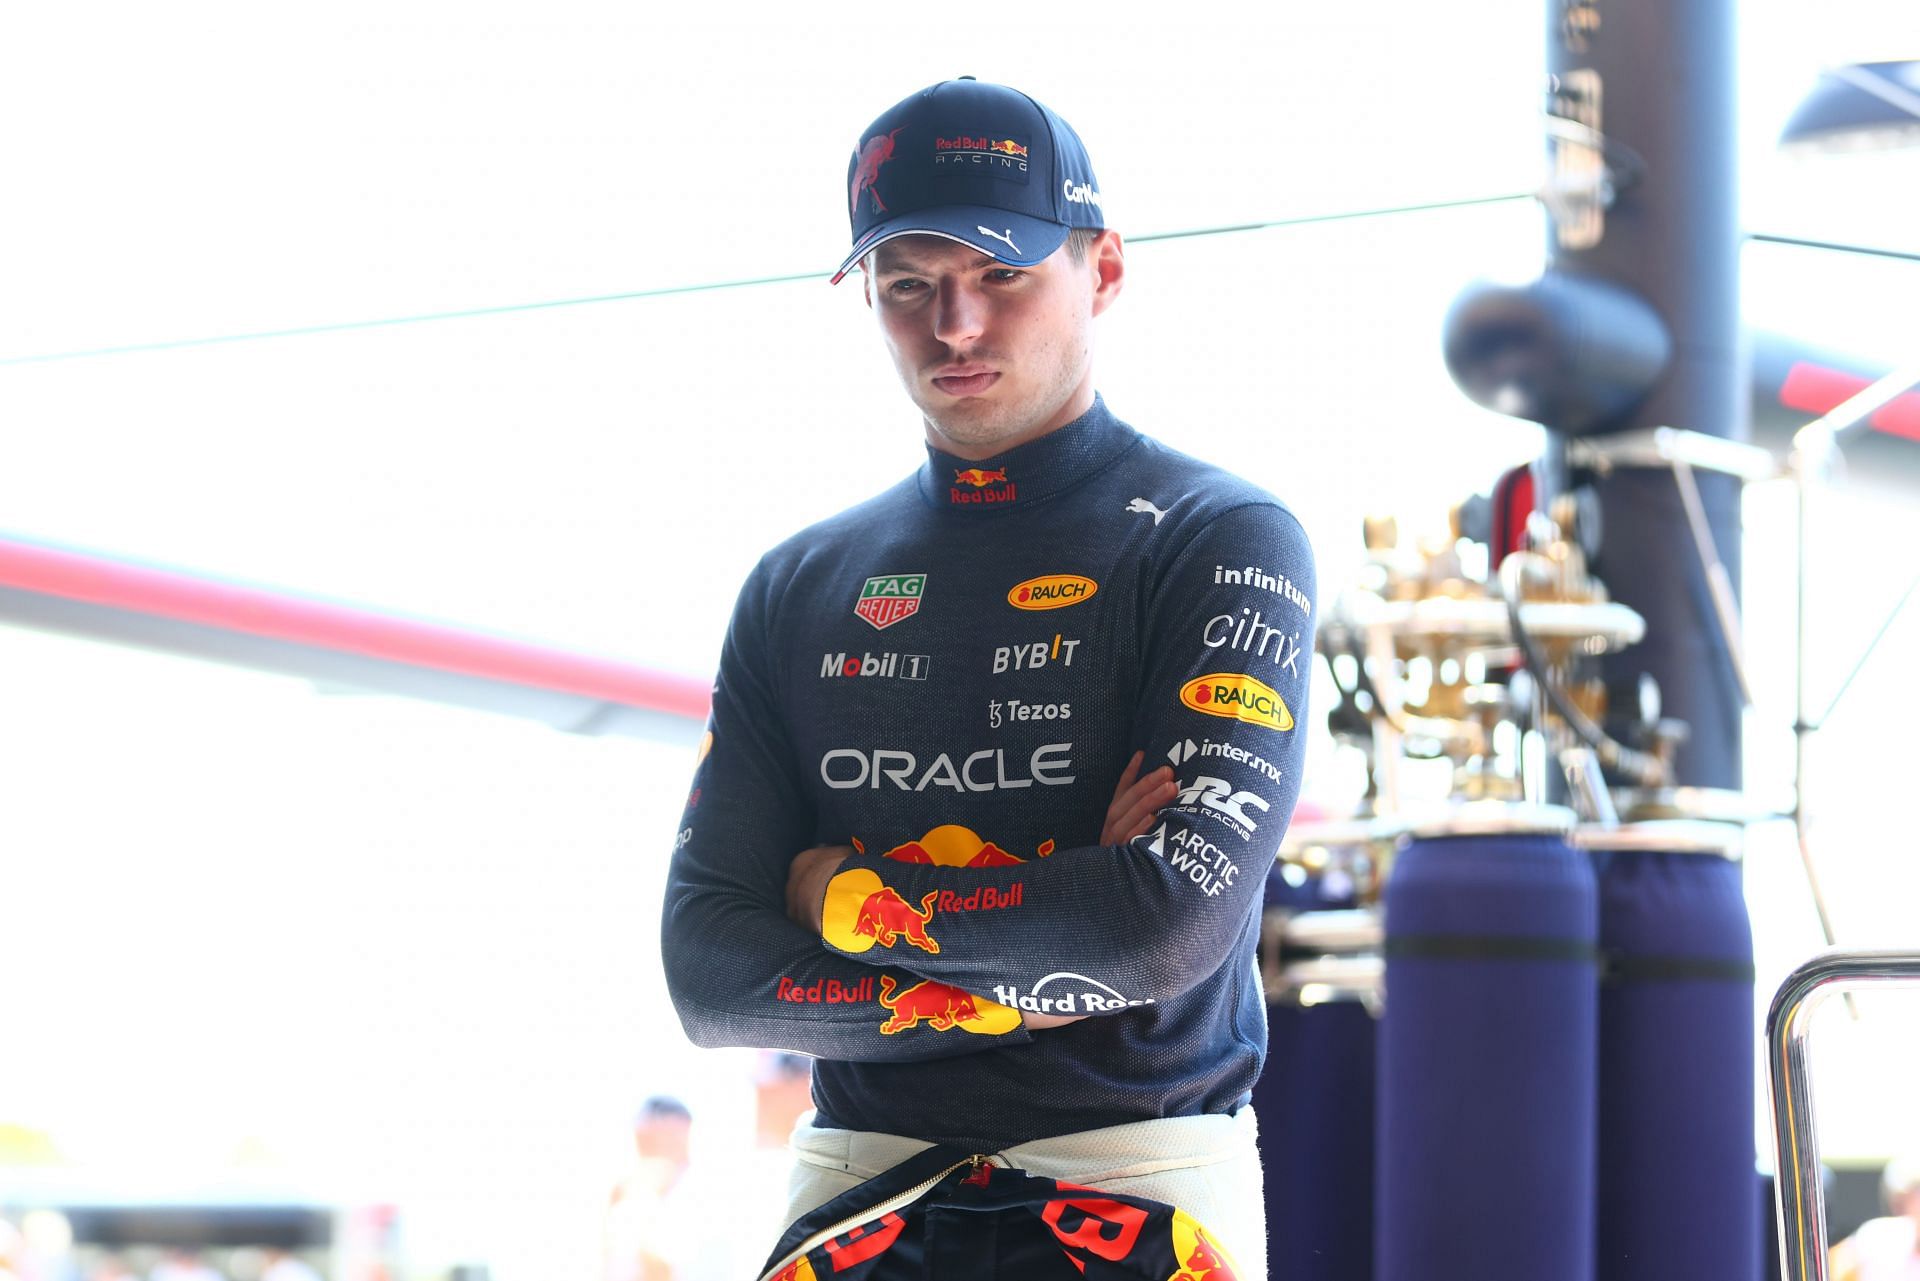 F1 Grand Prix of France - Practice - Max Verstappen prepares for FP1.